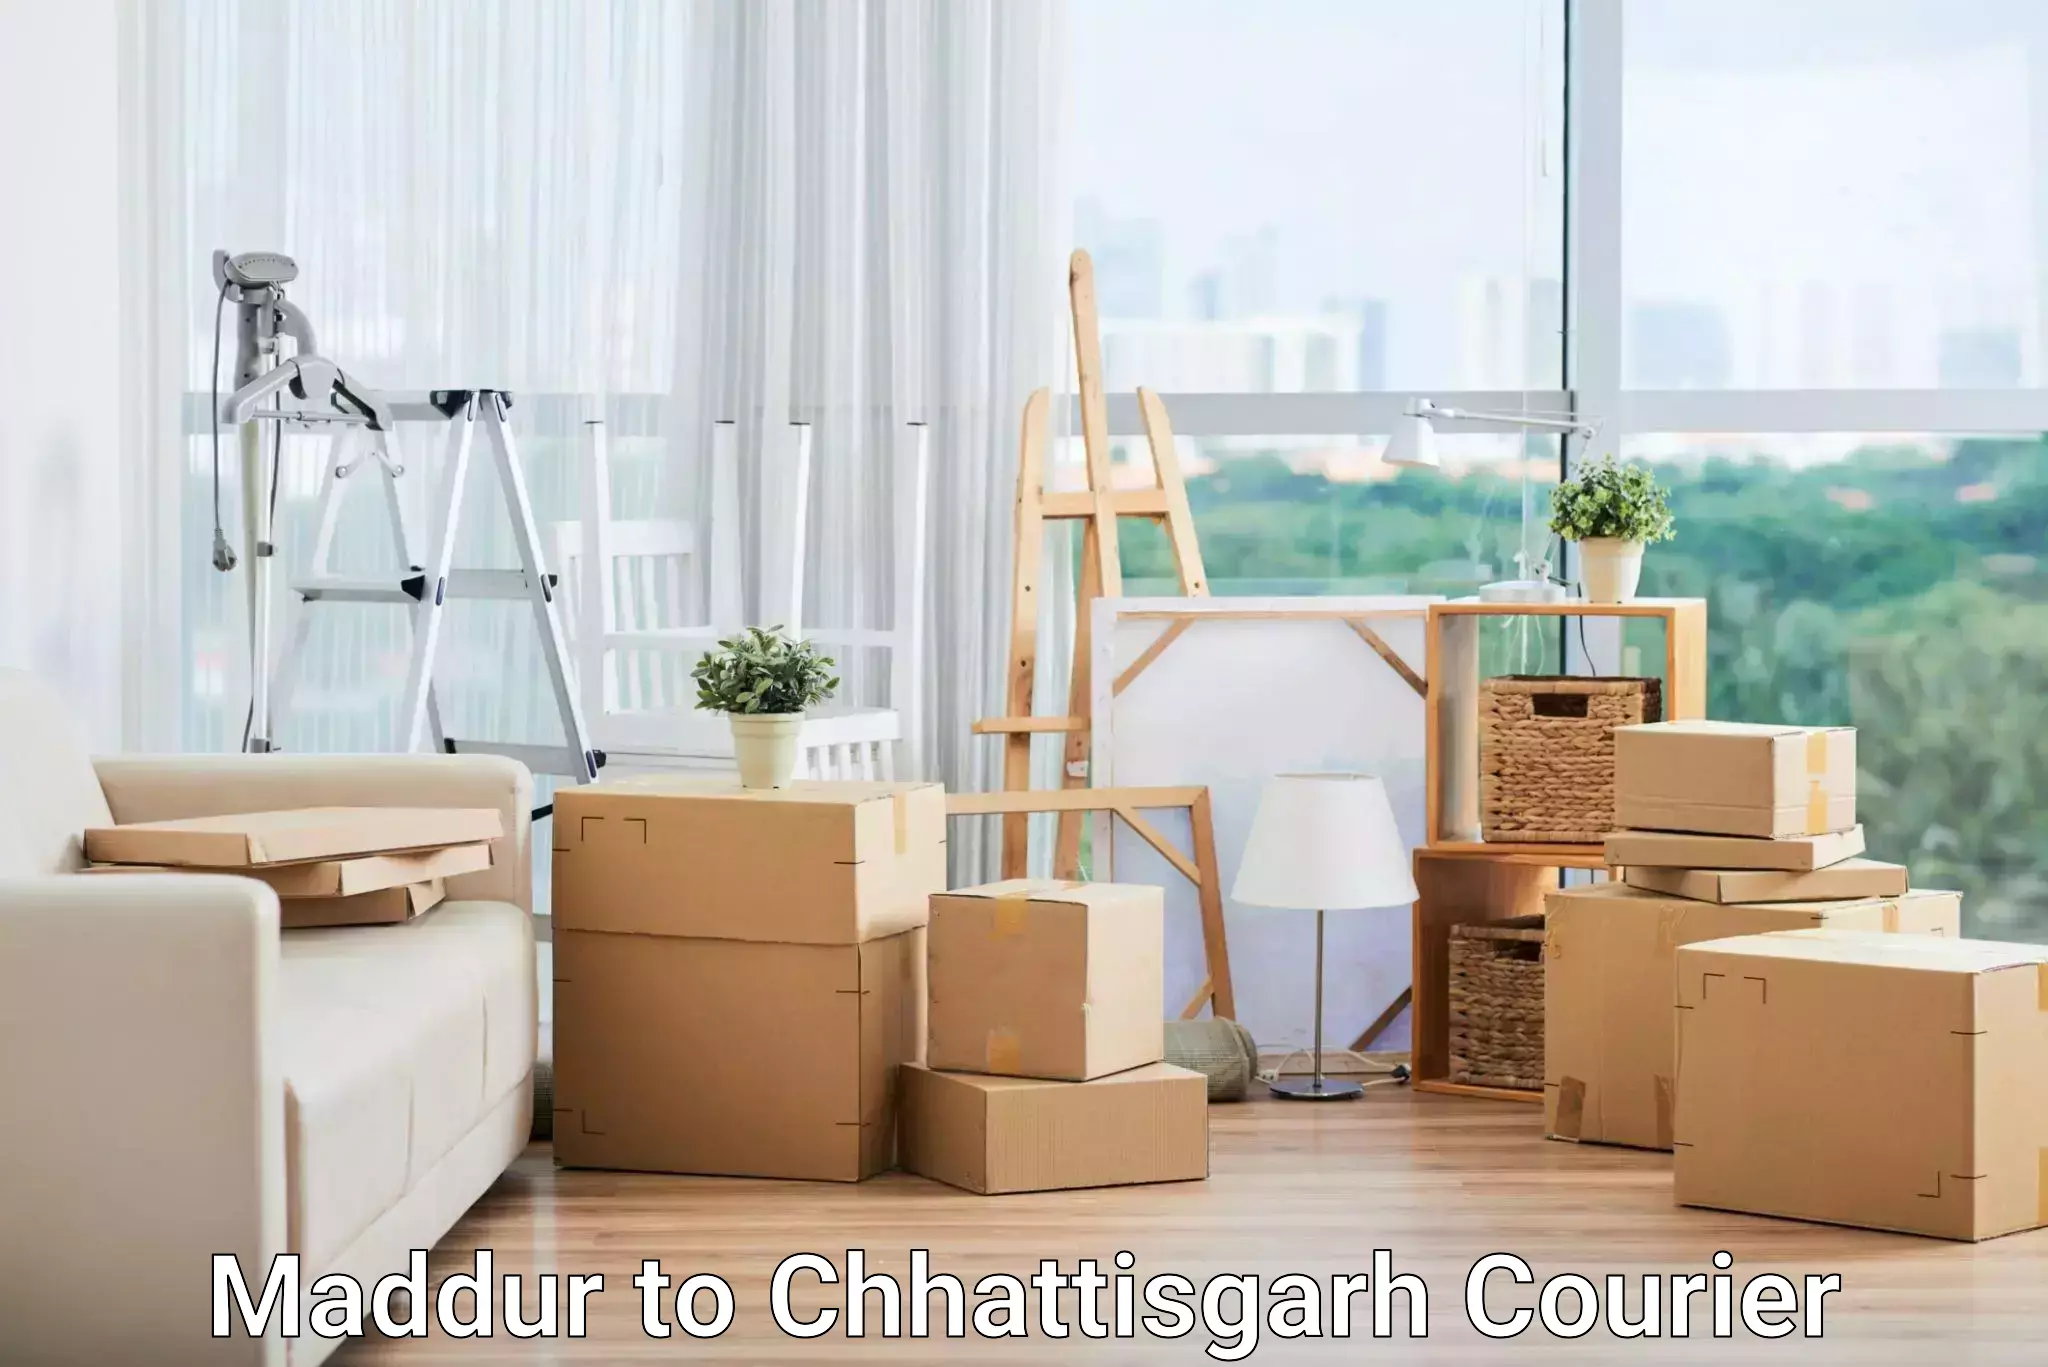 Customer-focused courier Maddur to Korea Chhattisgarh